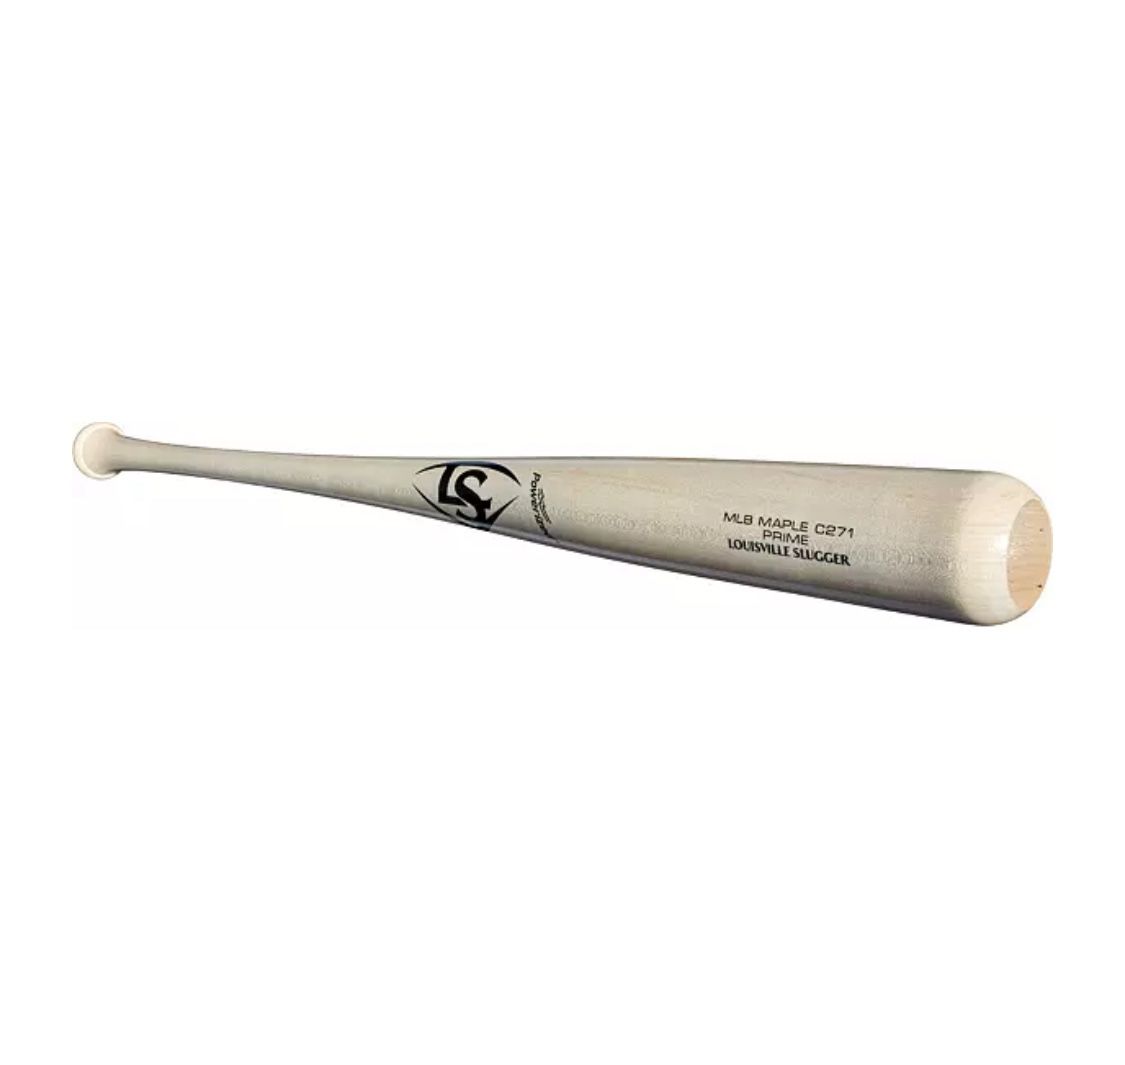 Louisville slugger MLB prime c271 maple Baseball Bat